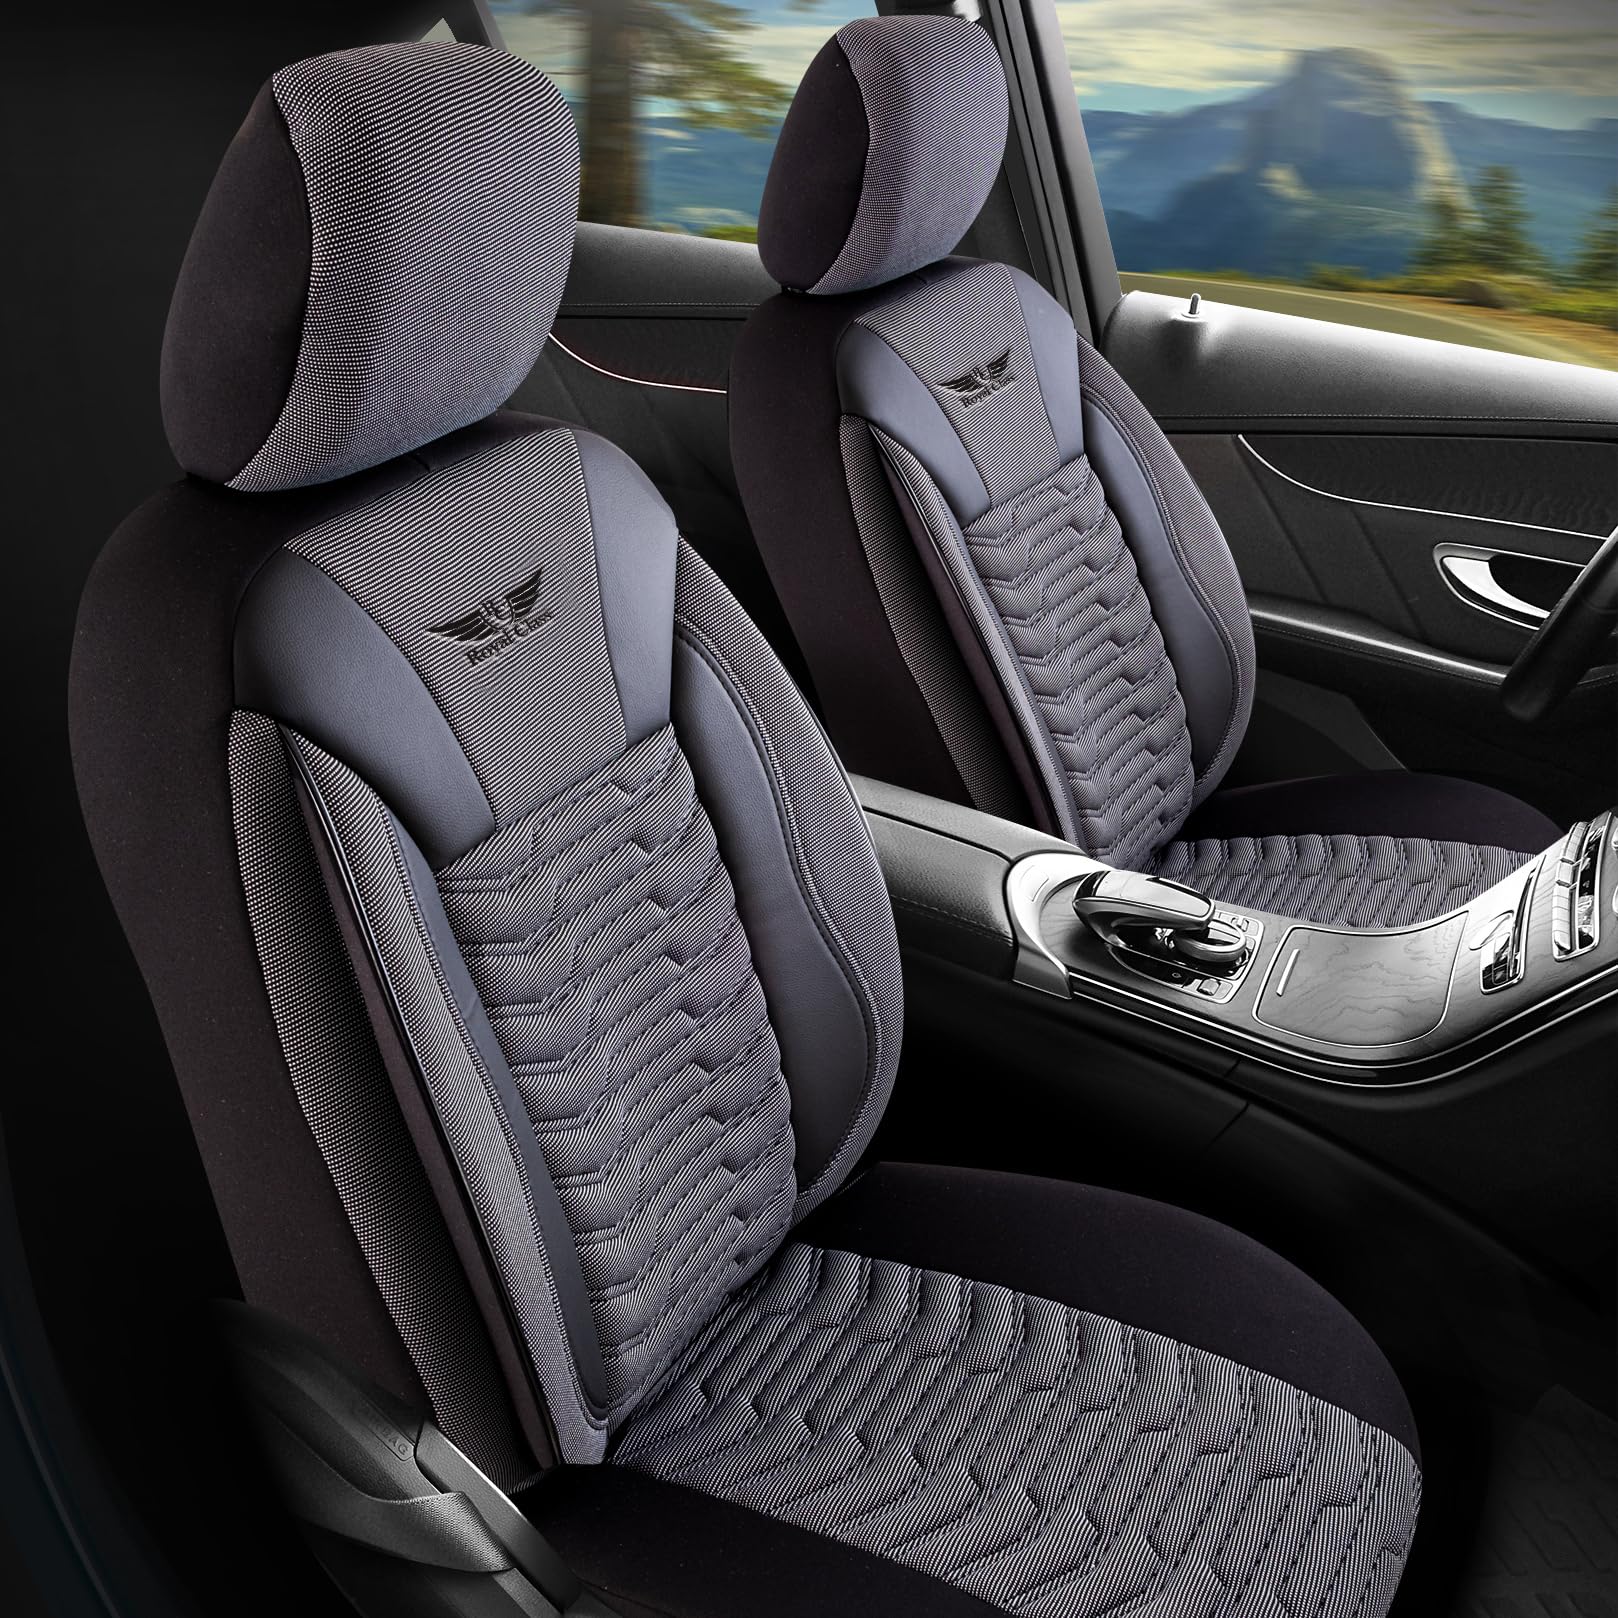 Royal Class Auto Sitzbezüge kompatibel für Hyundai i30 in Dark Grau Komplett Fahrer und Beifahrer mit Rücksitzbank, Autositzbezug Schonbezug Sitzbezug Komplettset 5-Sitze Kunstleder von RC Royal Class